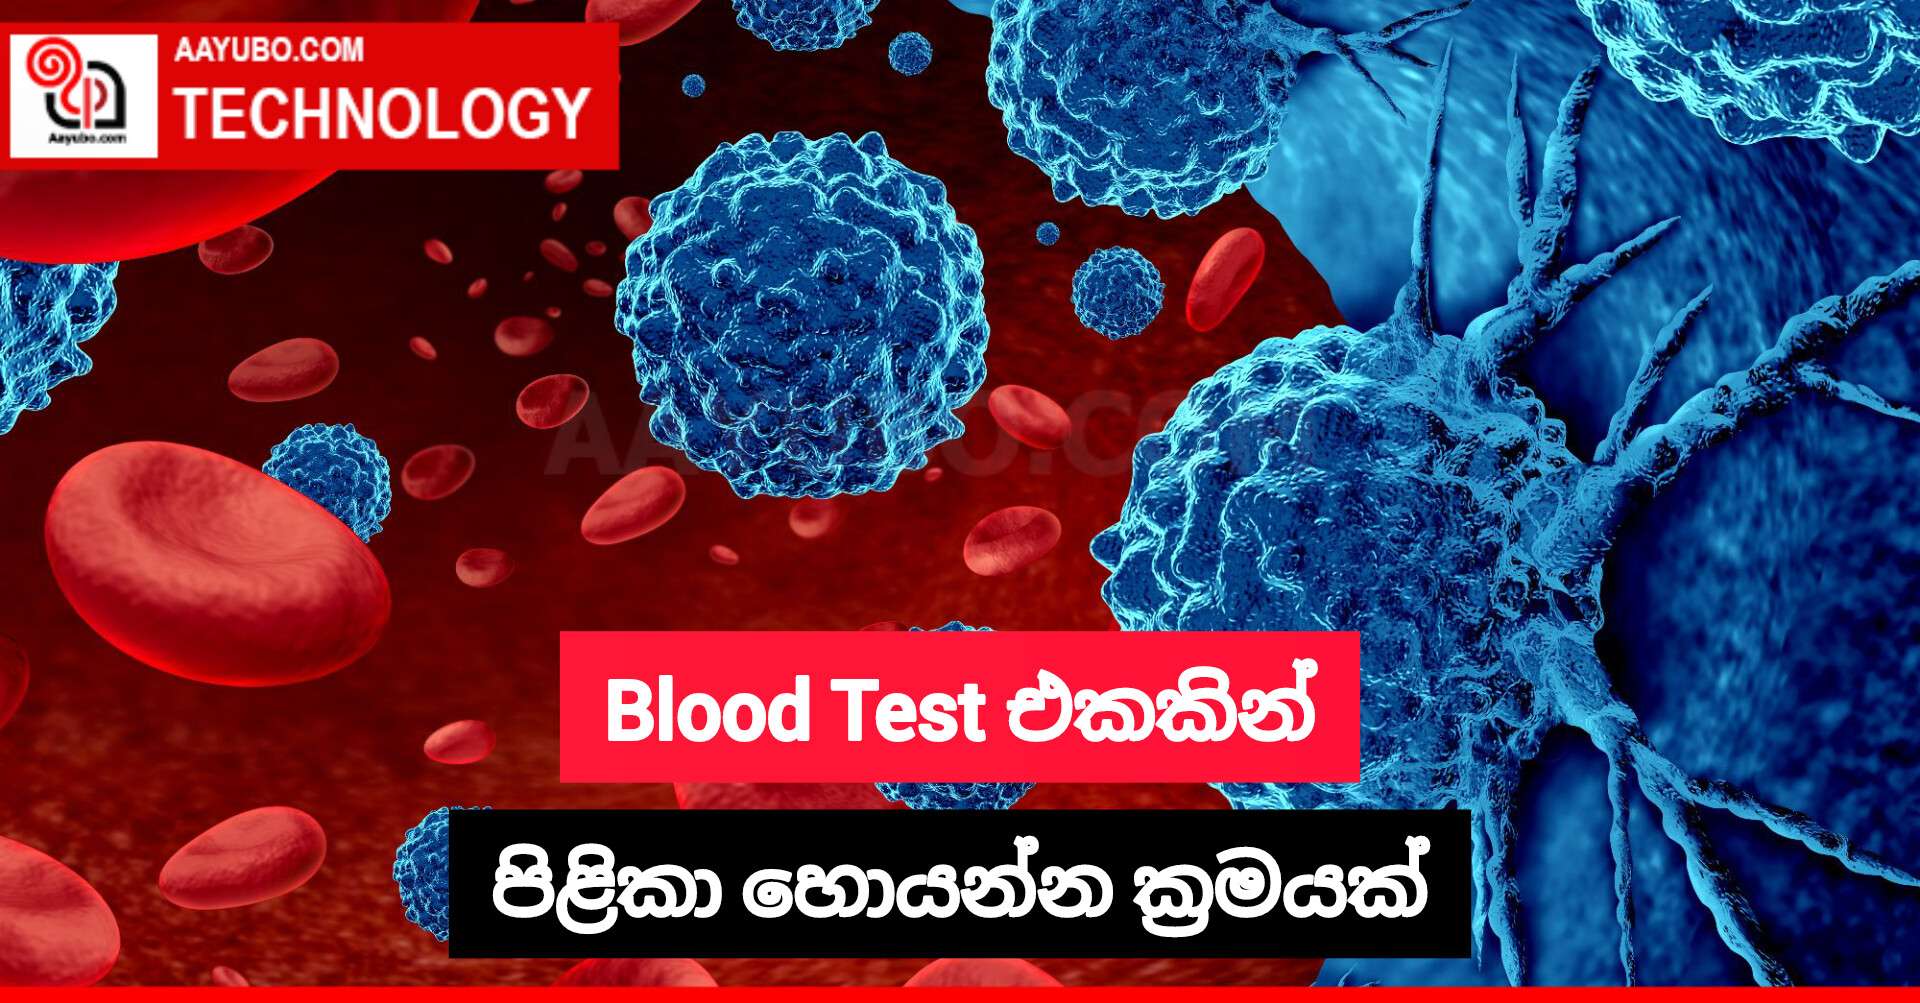 Blood Test එකකින් පිළිකා හොයන්න ක්‍රමයක්